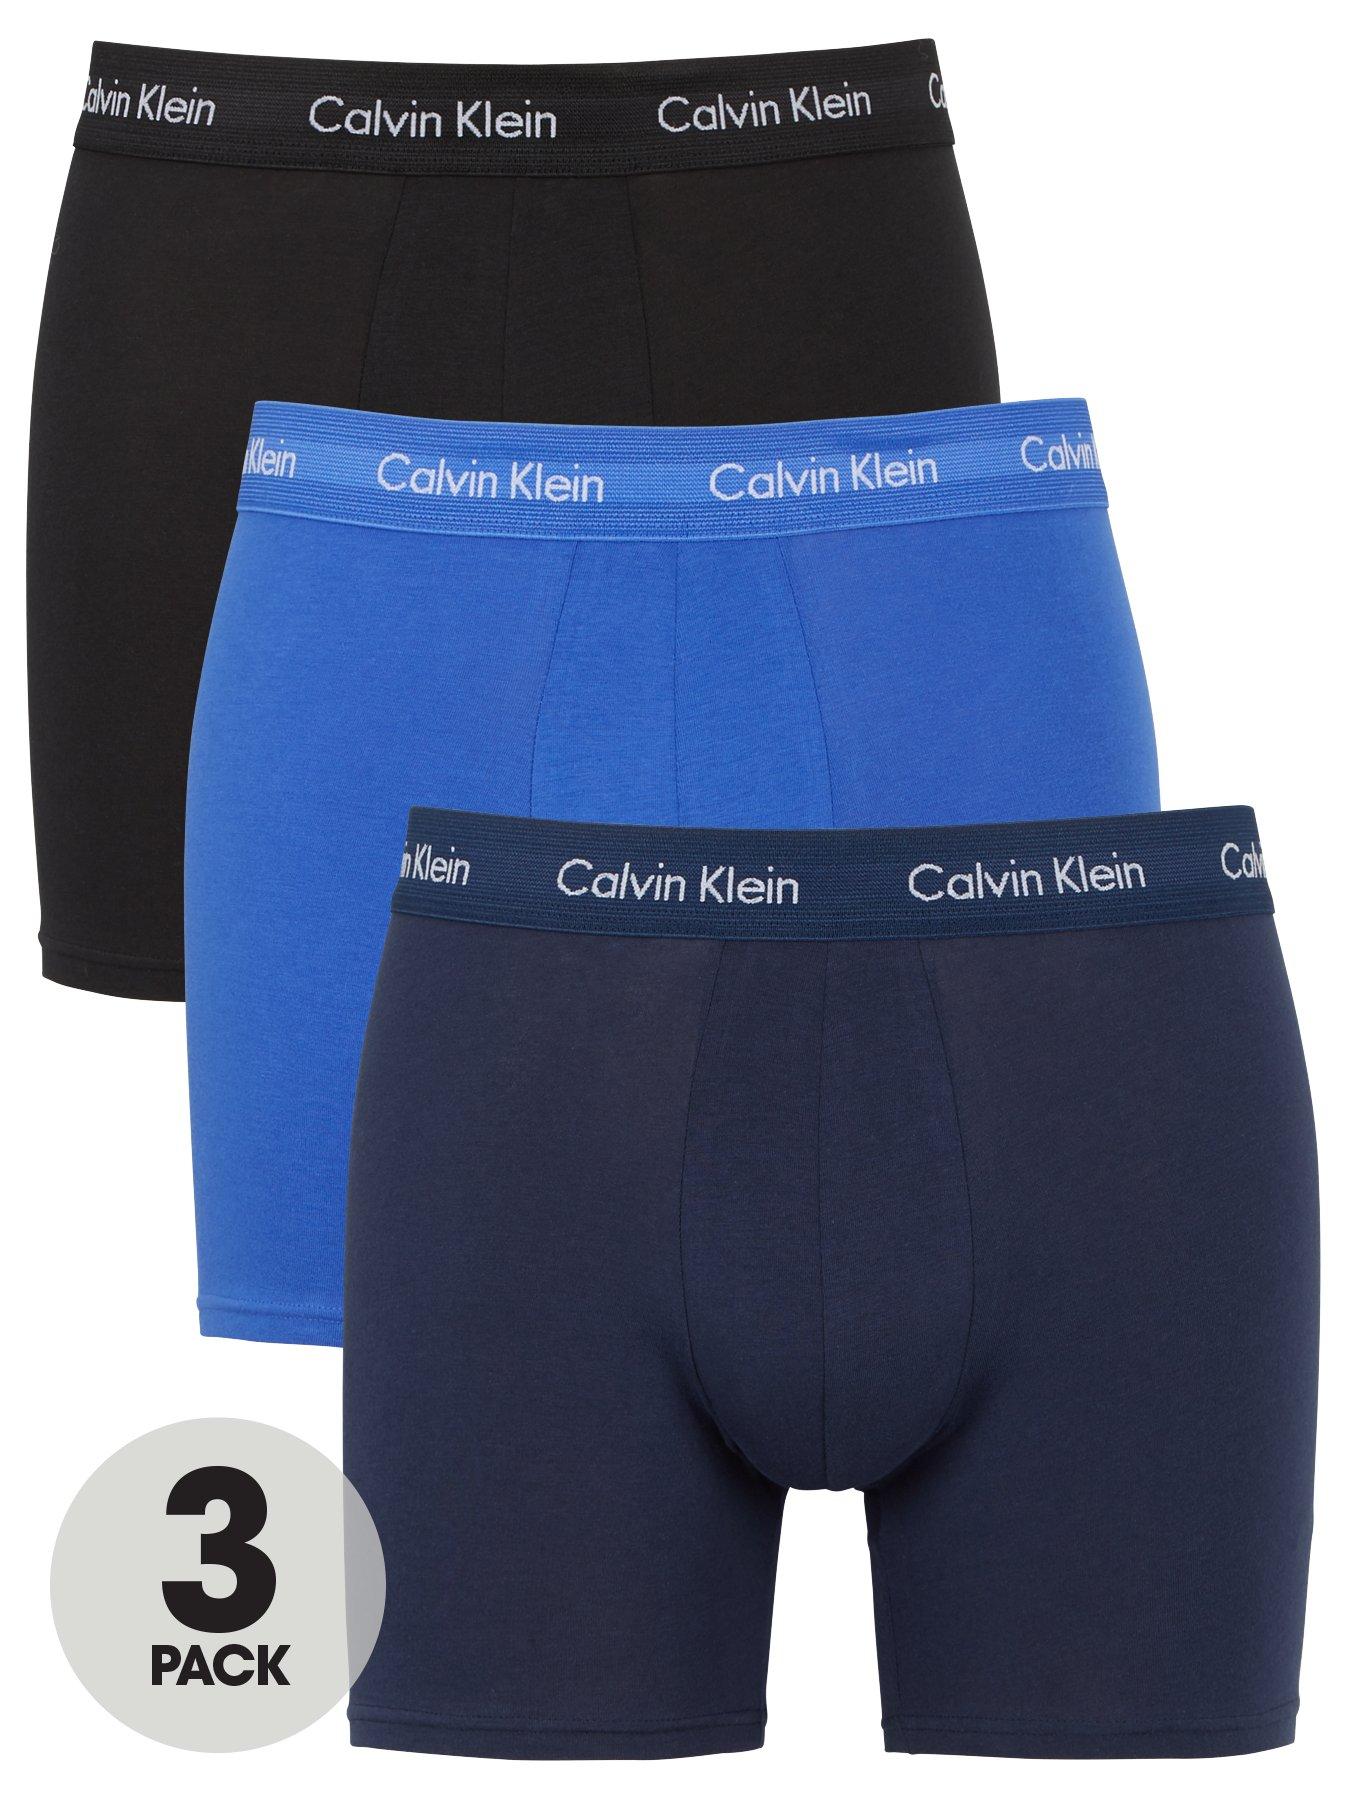 Calvin Klein 3 Pack Boxer Briefs - Blue/Navy/Black | very.co.uk